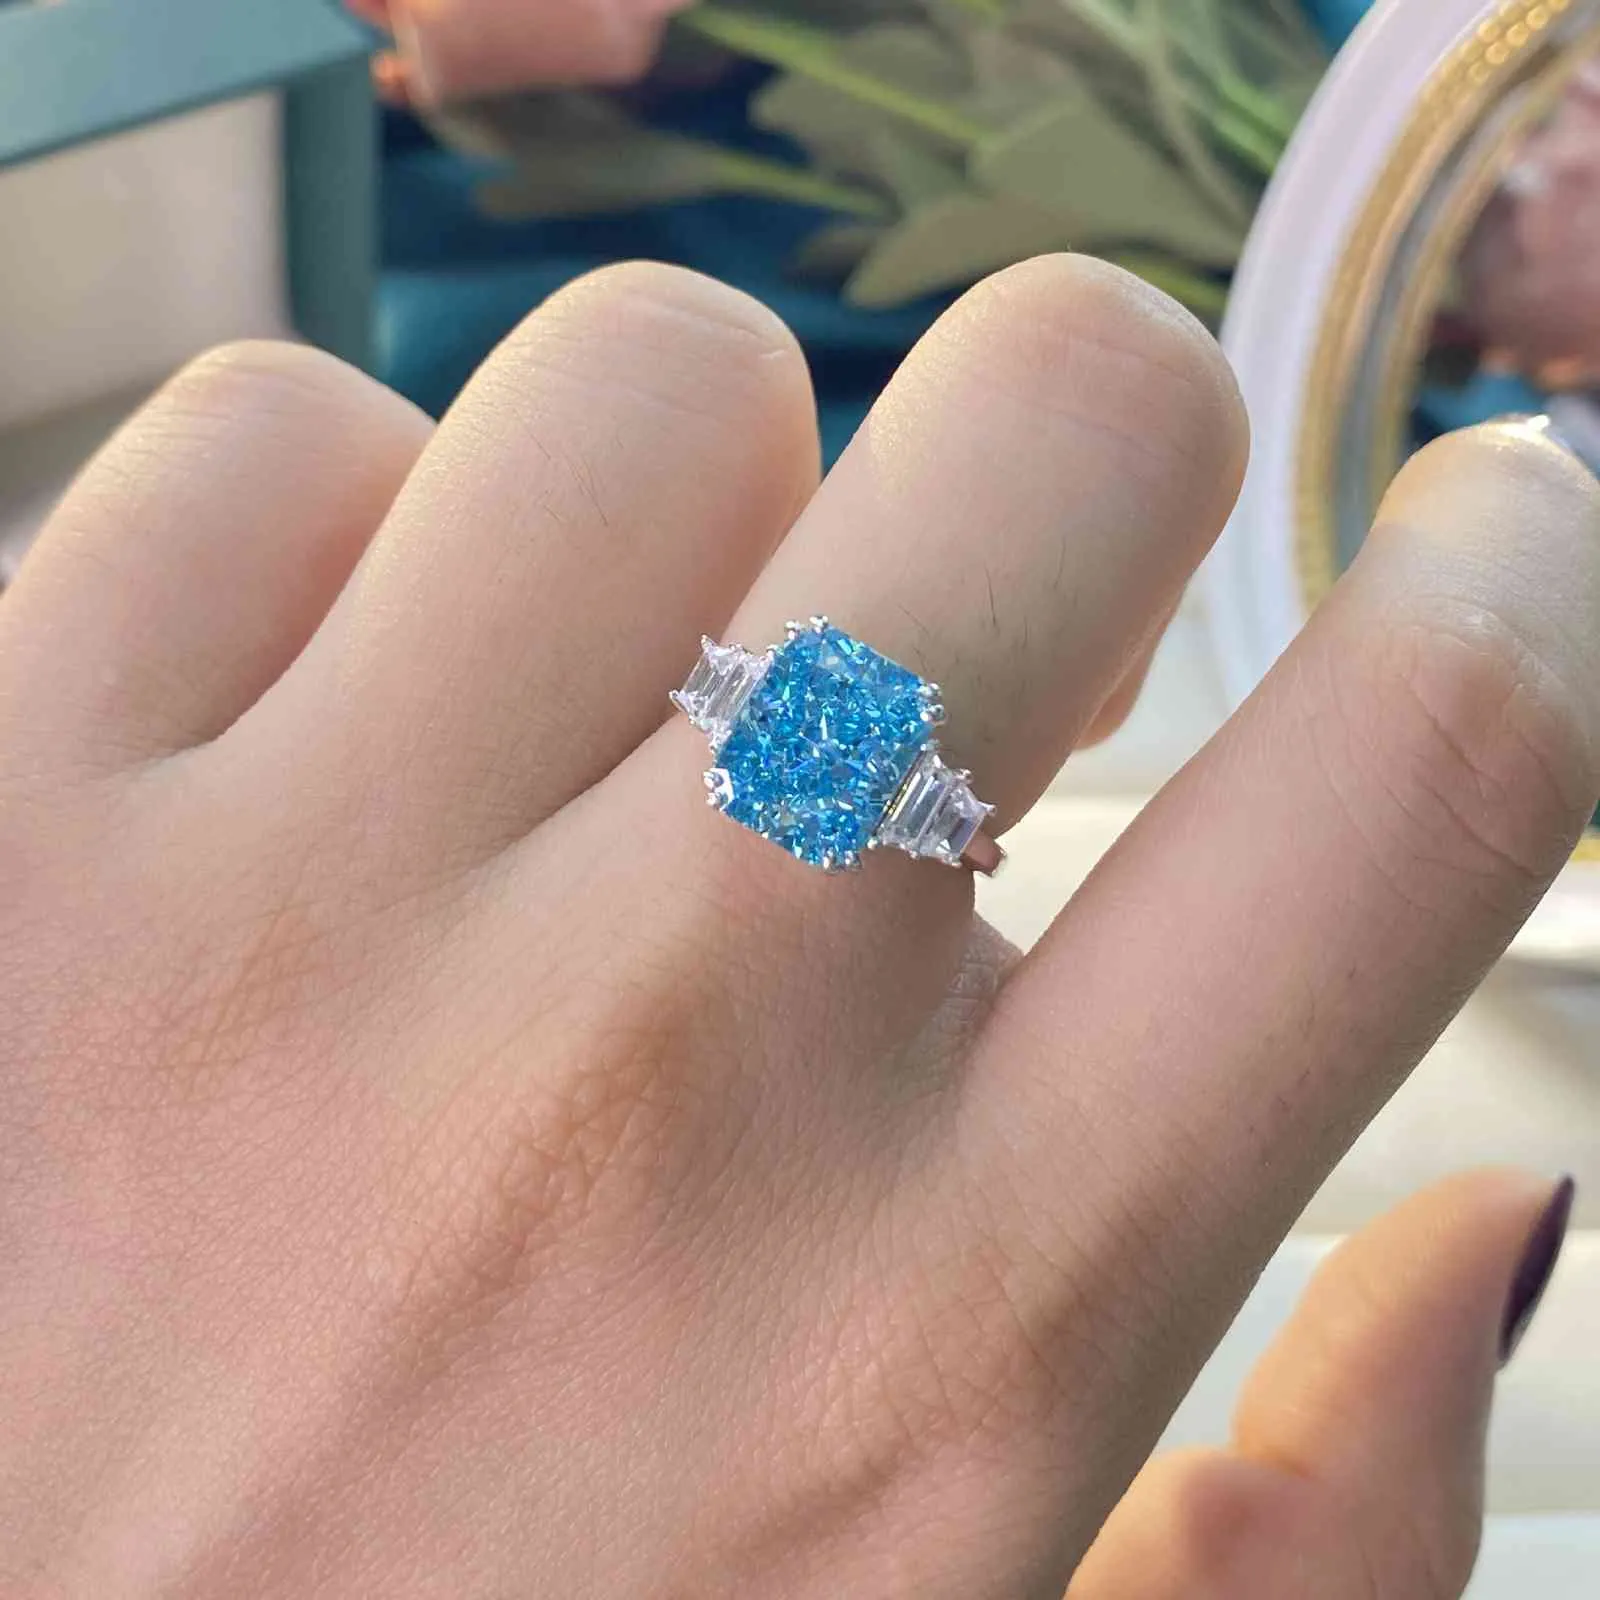 Wong Chuva 100% 925 Sterling Silver Criado Moissanite Gemstone Diamantes de Casamento Anel de Noivado Mulheres Fine Jewelry Atacado